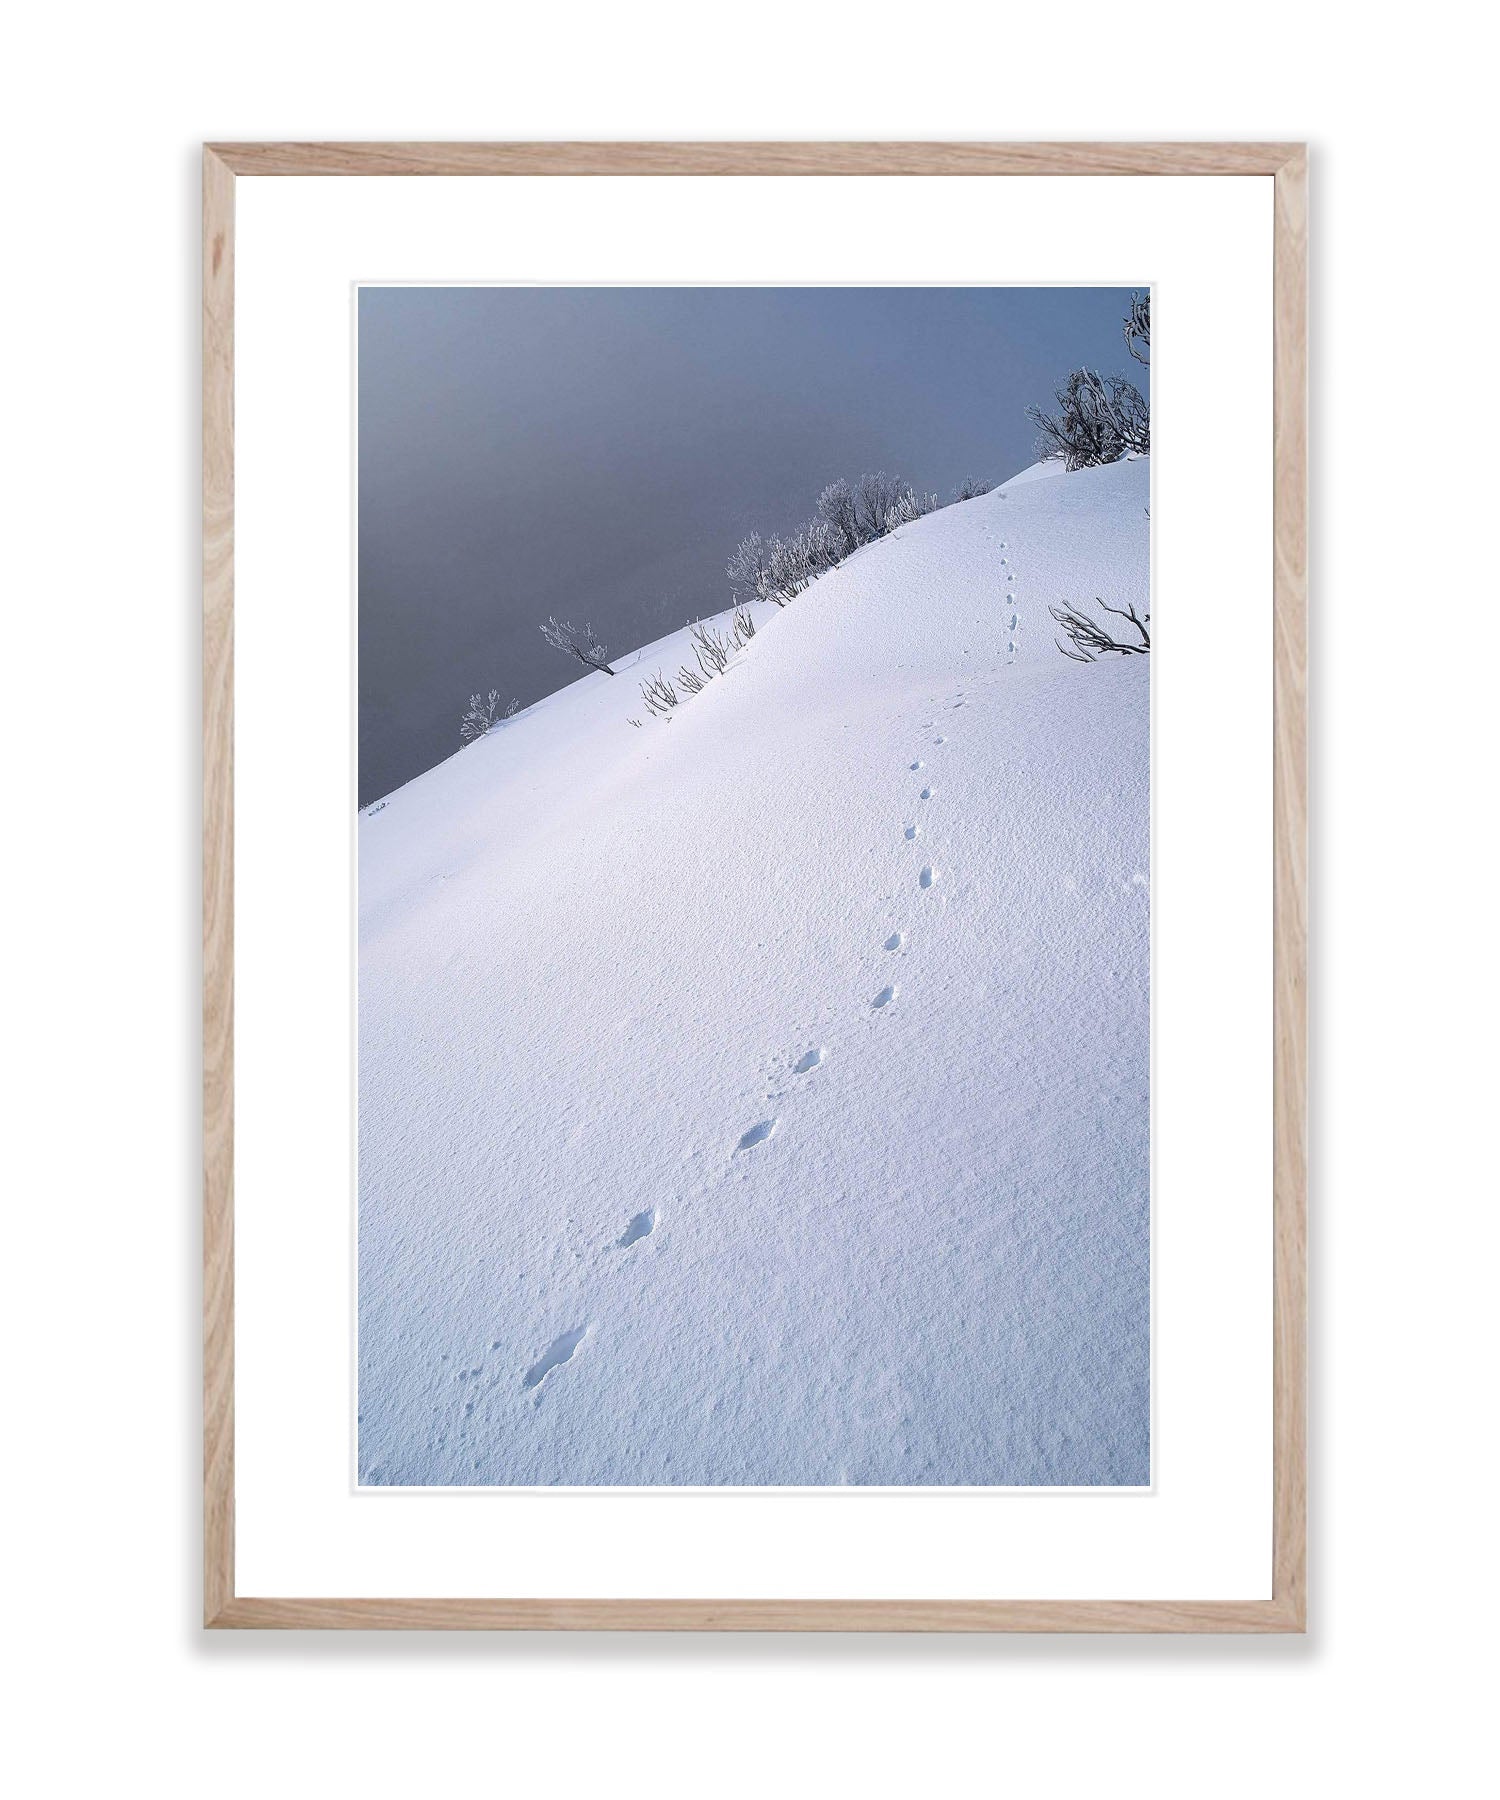 Footprints, Mount Hotham - VIC